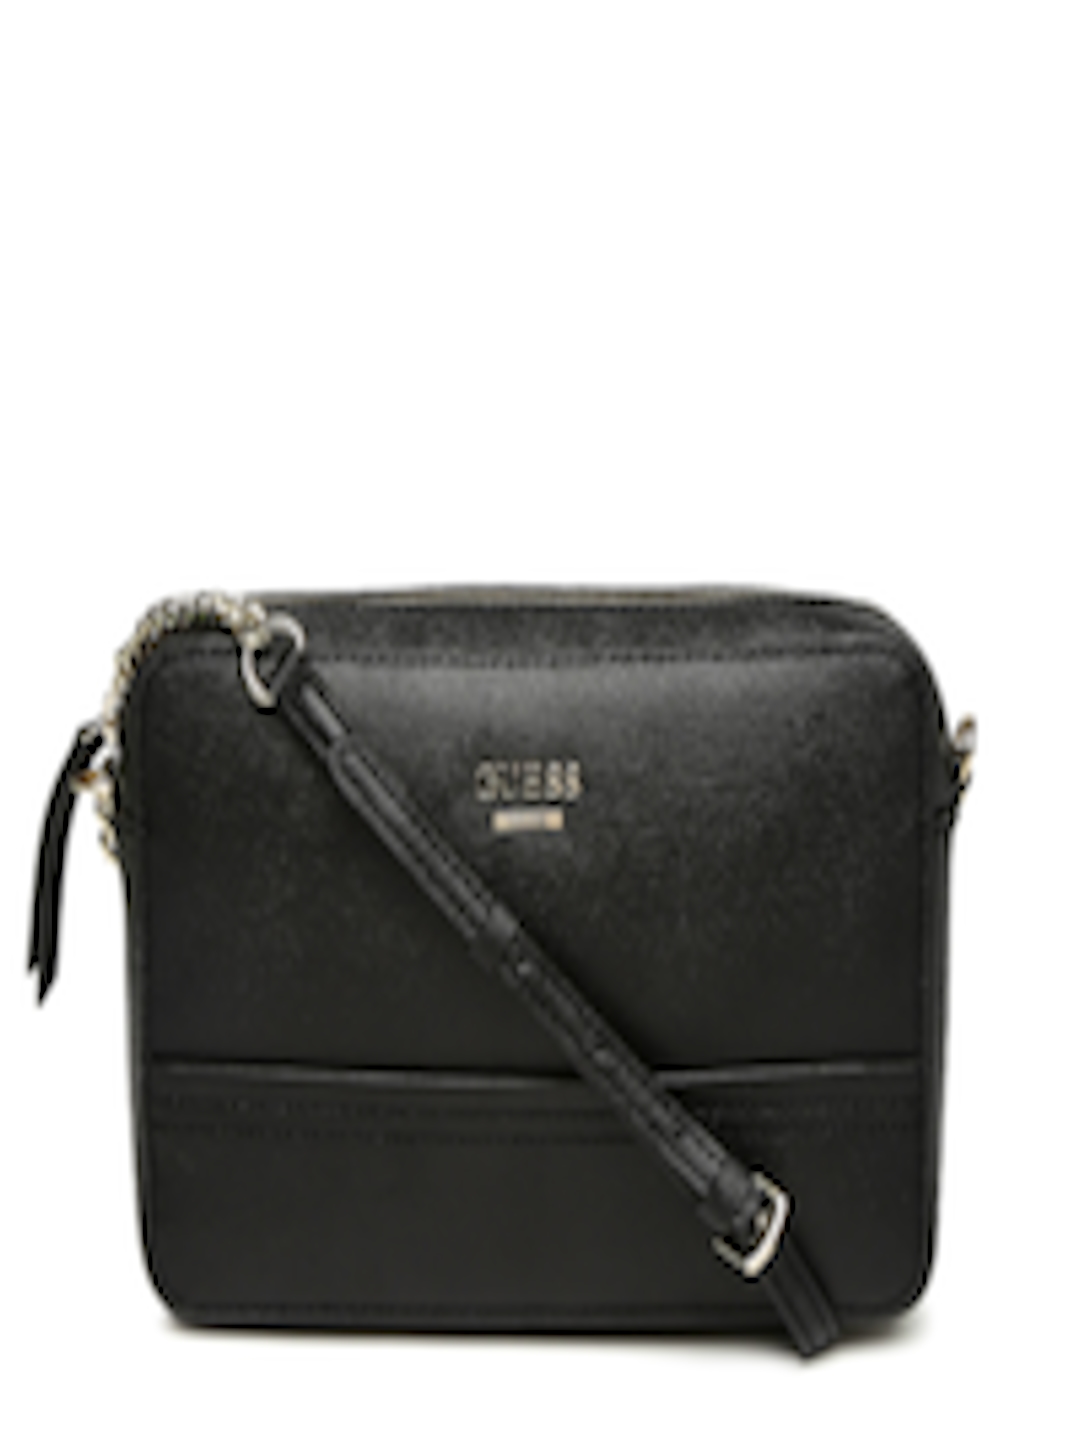 Buy GUESS Black Sling Bag - Handbags for Women 1738129 | Myntra